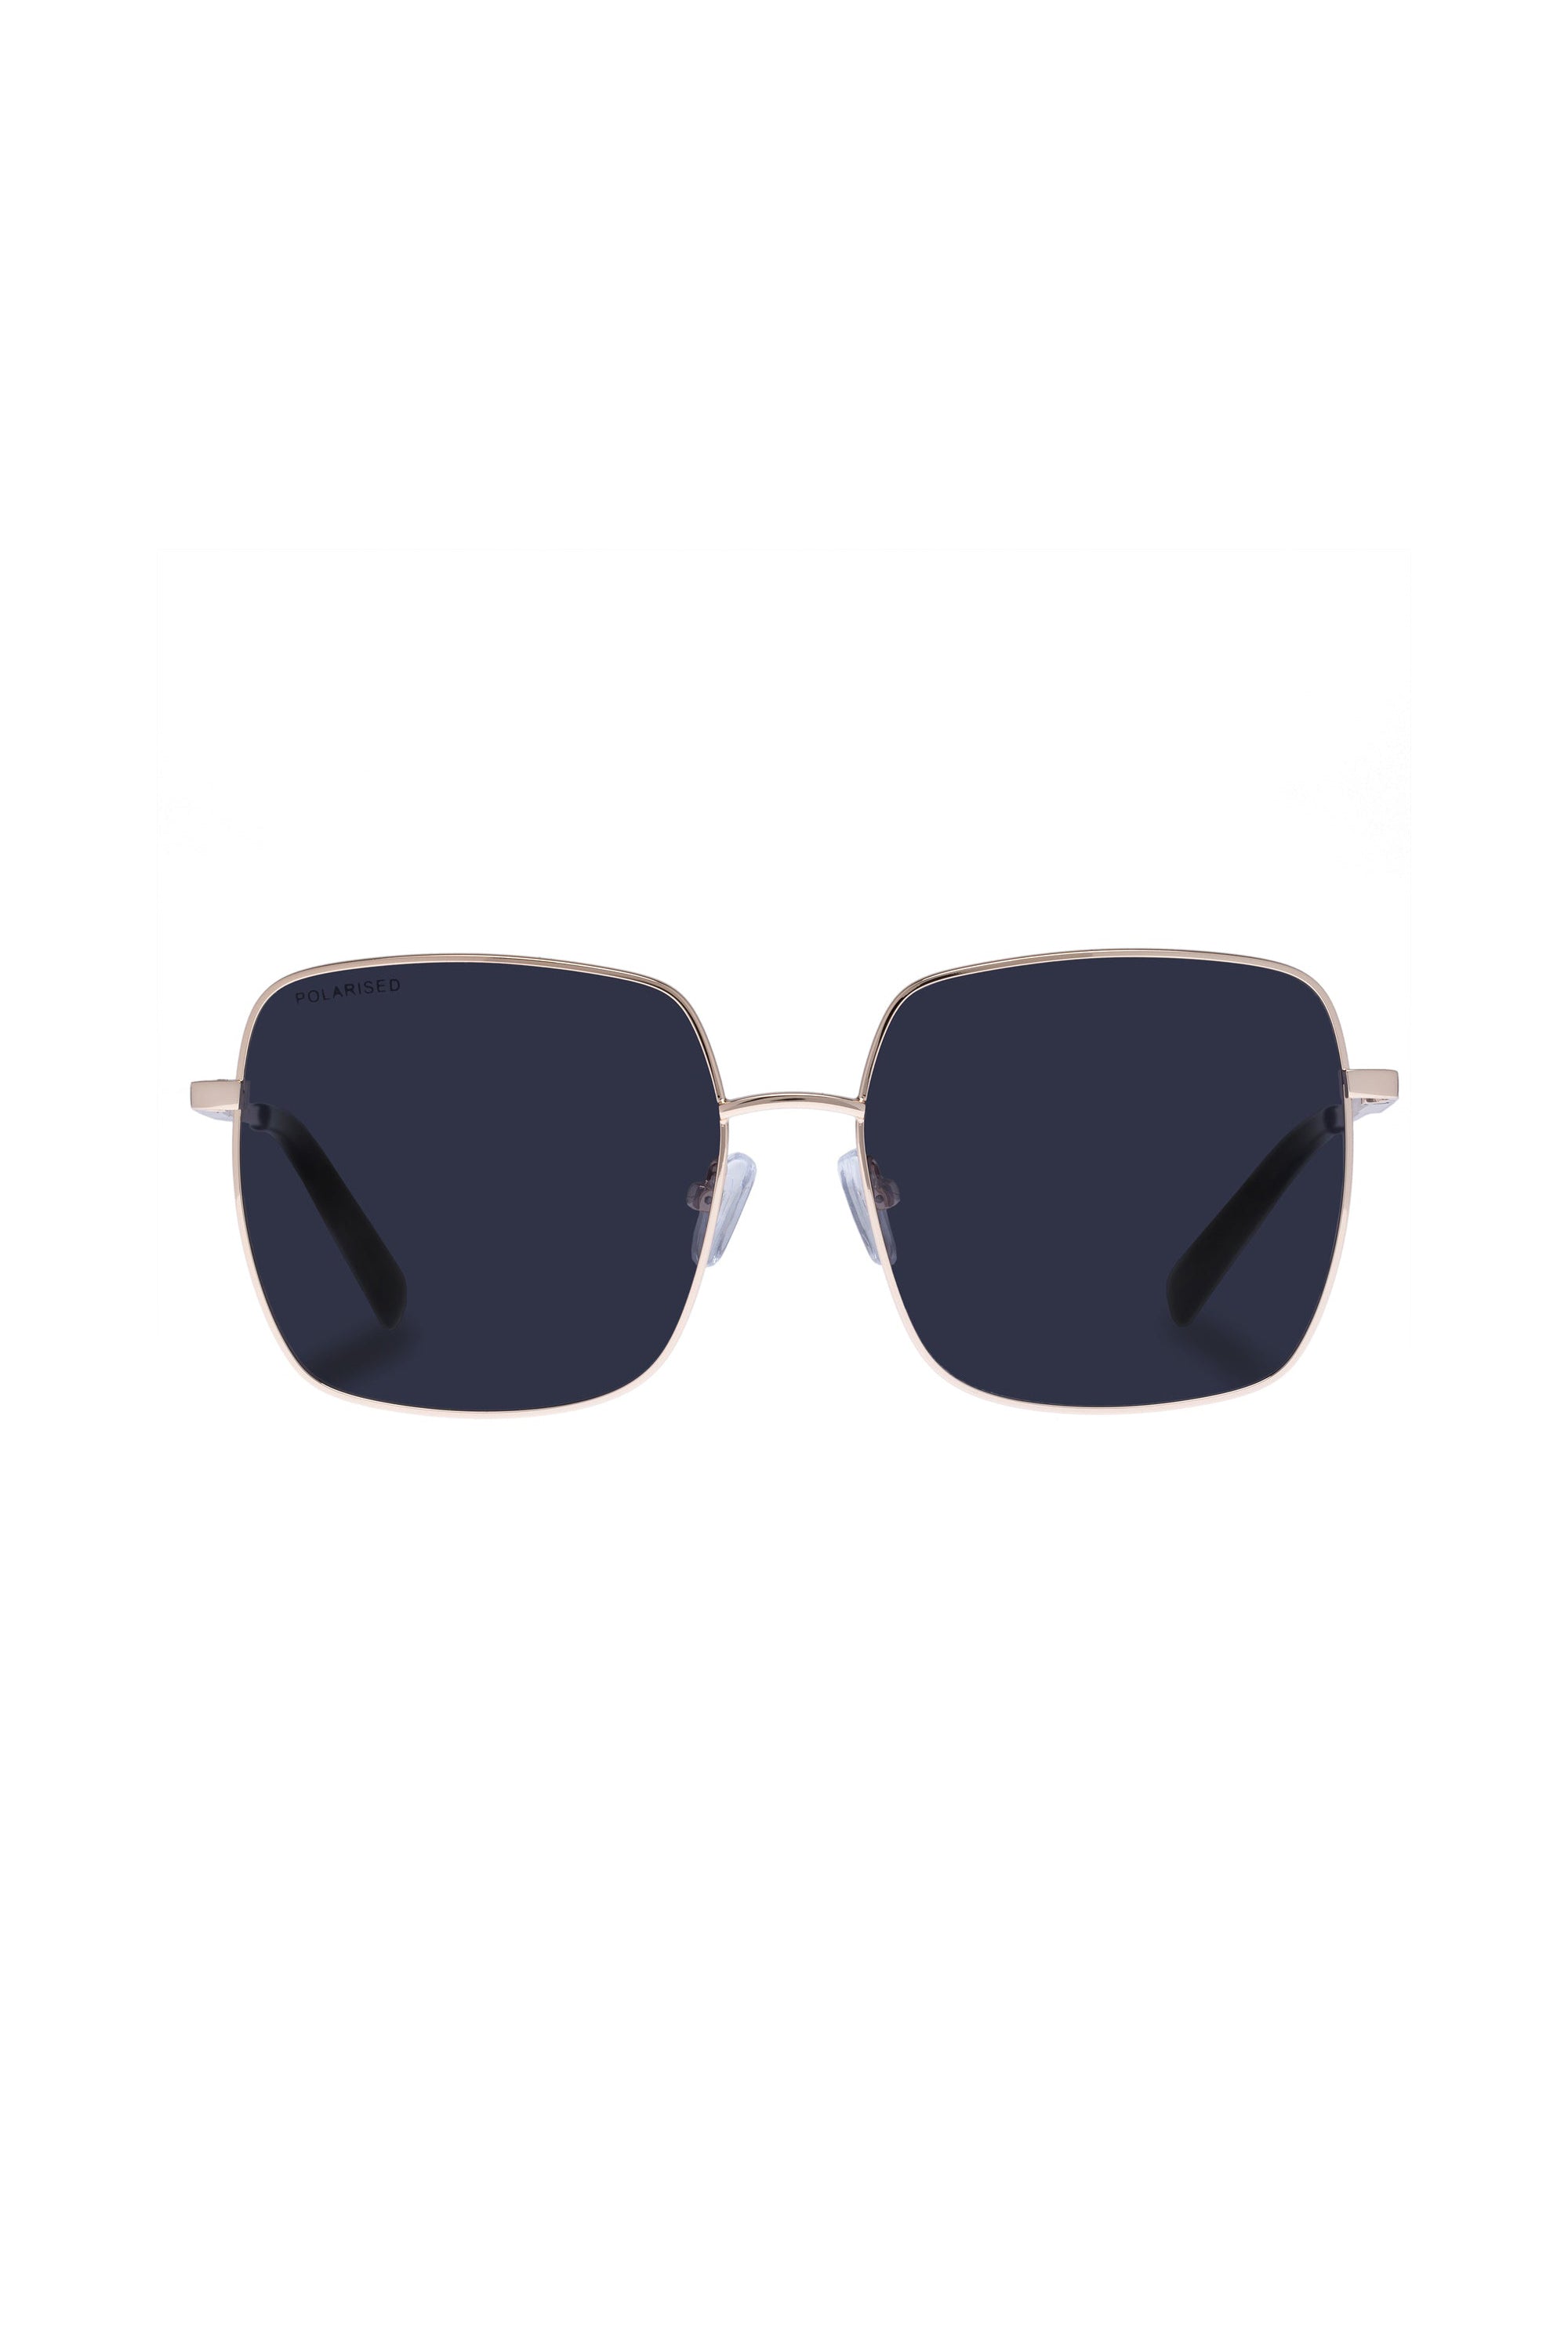 The Cherished Sunglasses - Gold w/ Smoke Mono *Polarized*